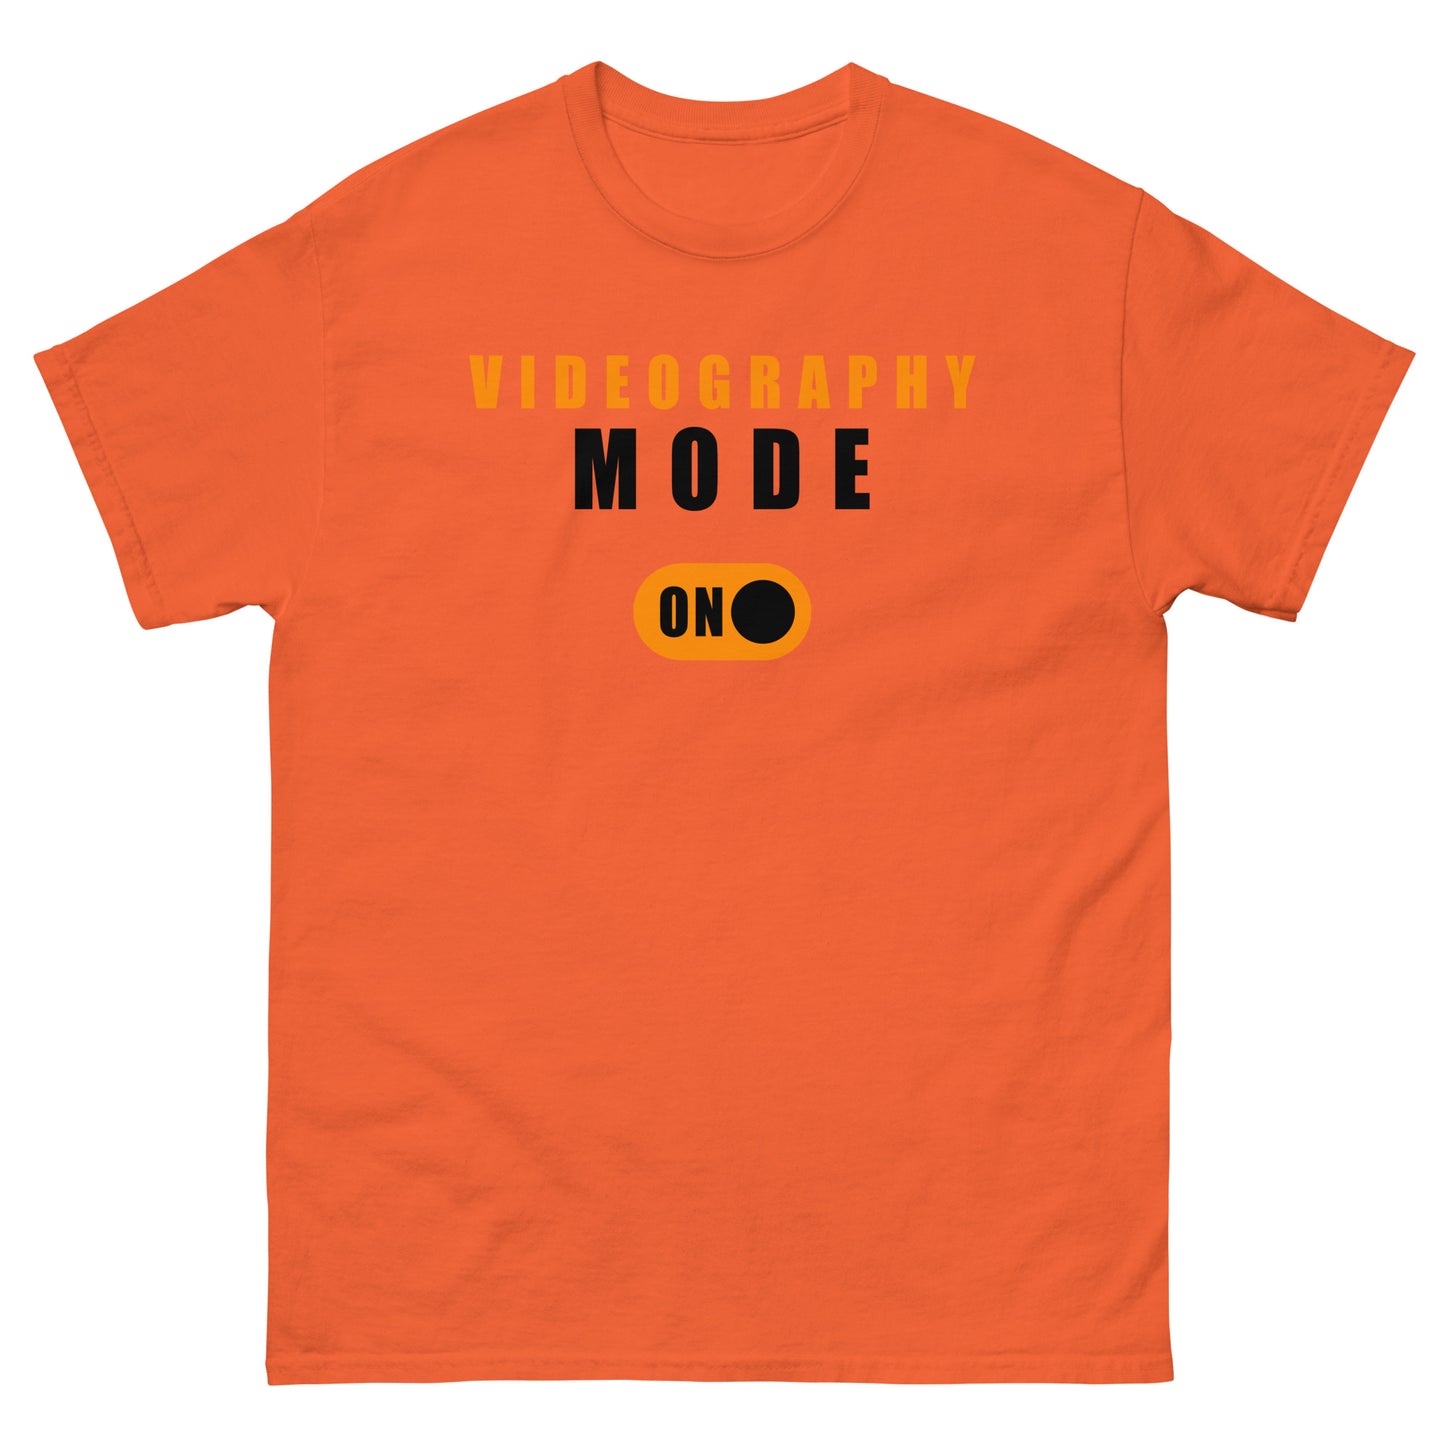 T-shirt da uomo - Modalità video - Logo nero